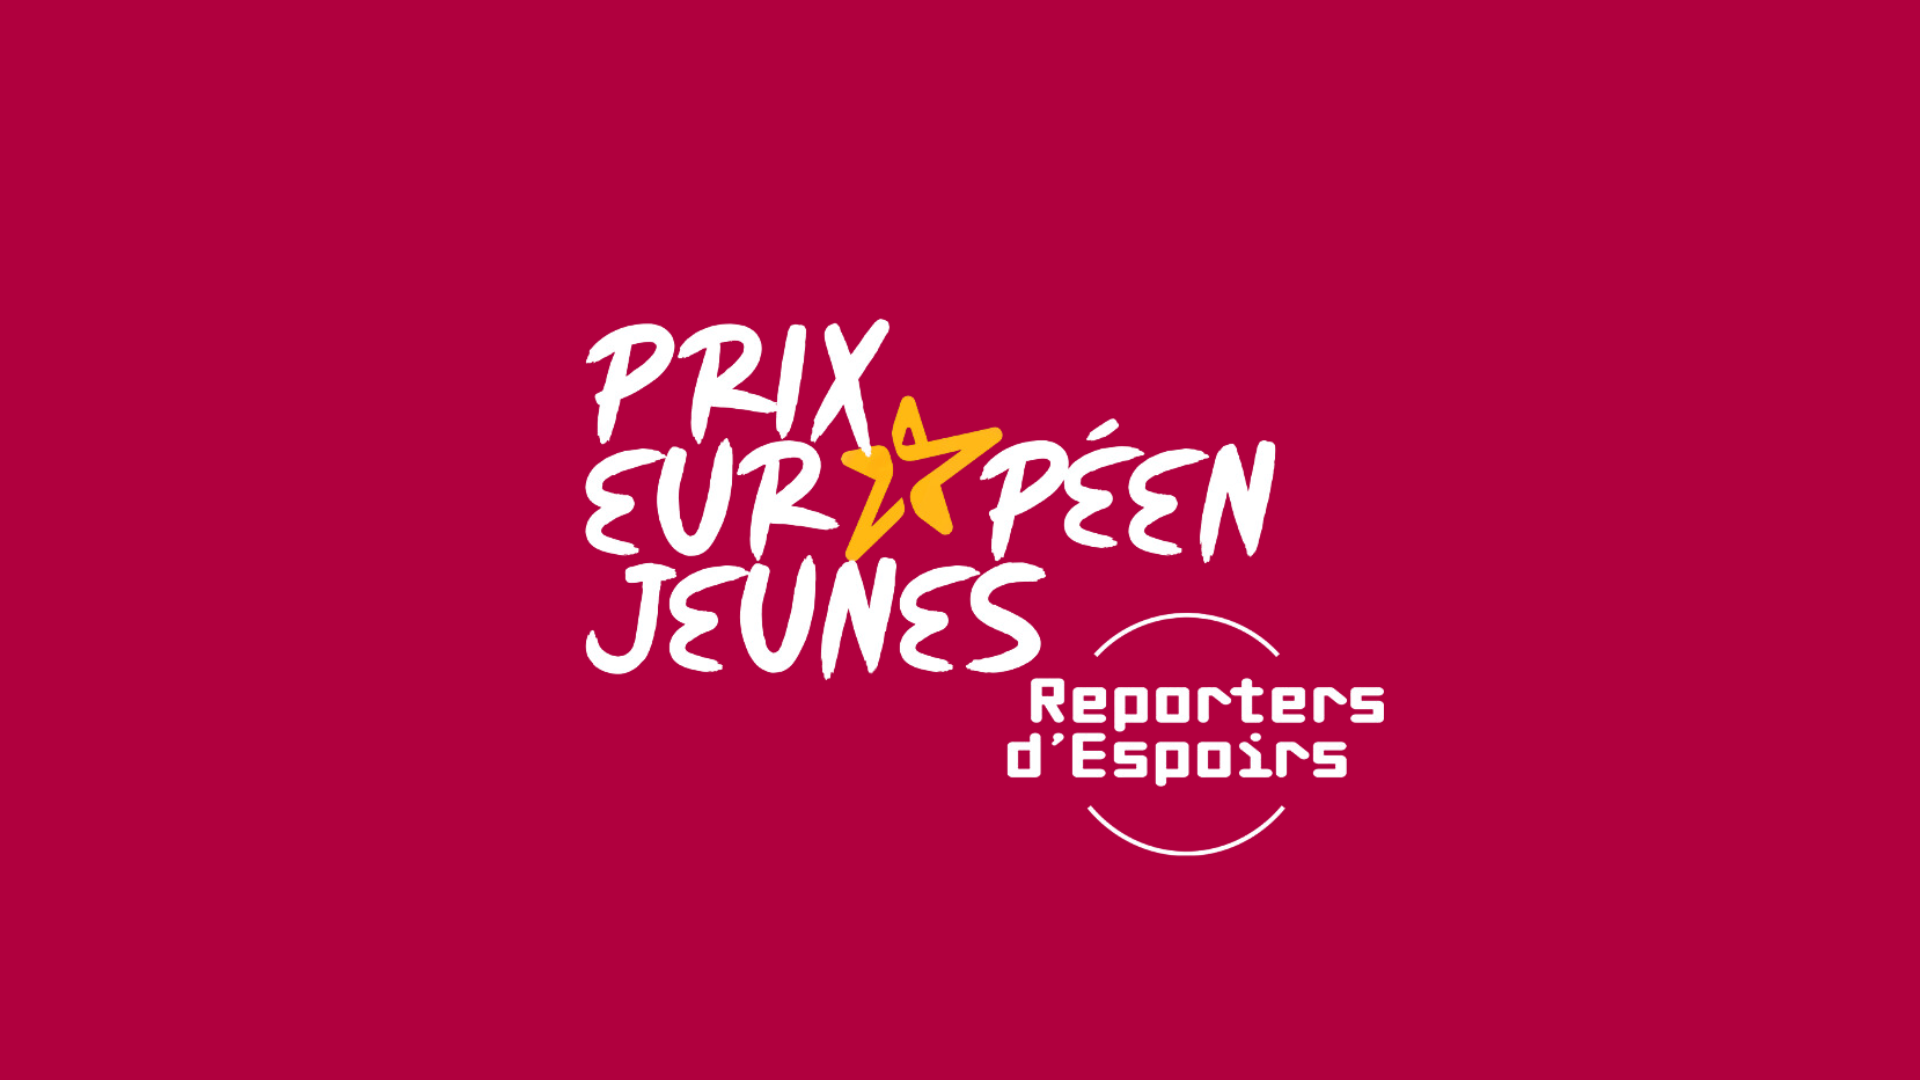 Prix européen jeunes Reporters d'Espoirs